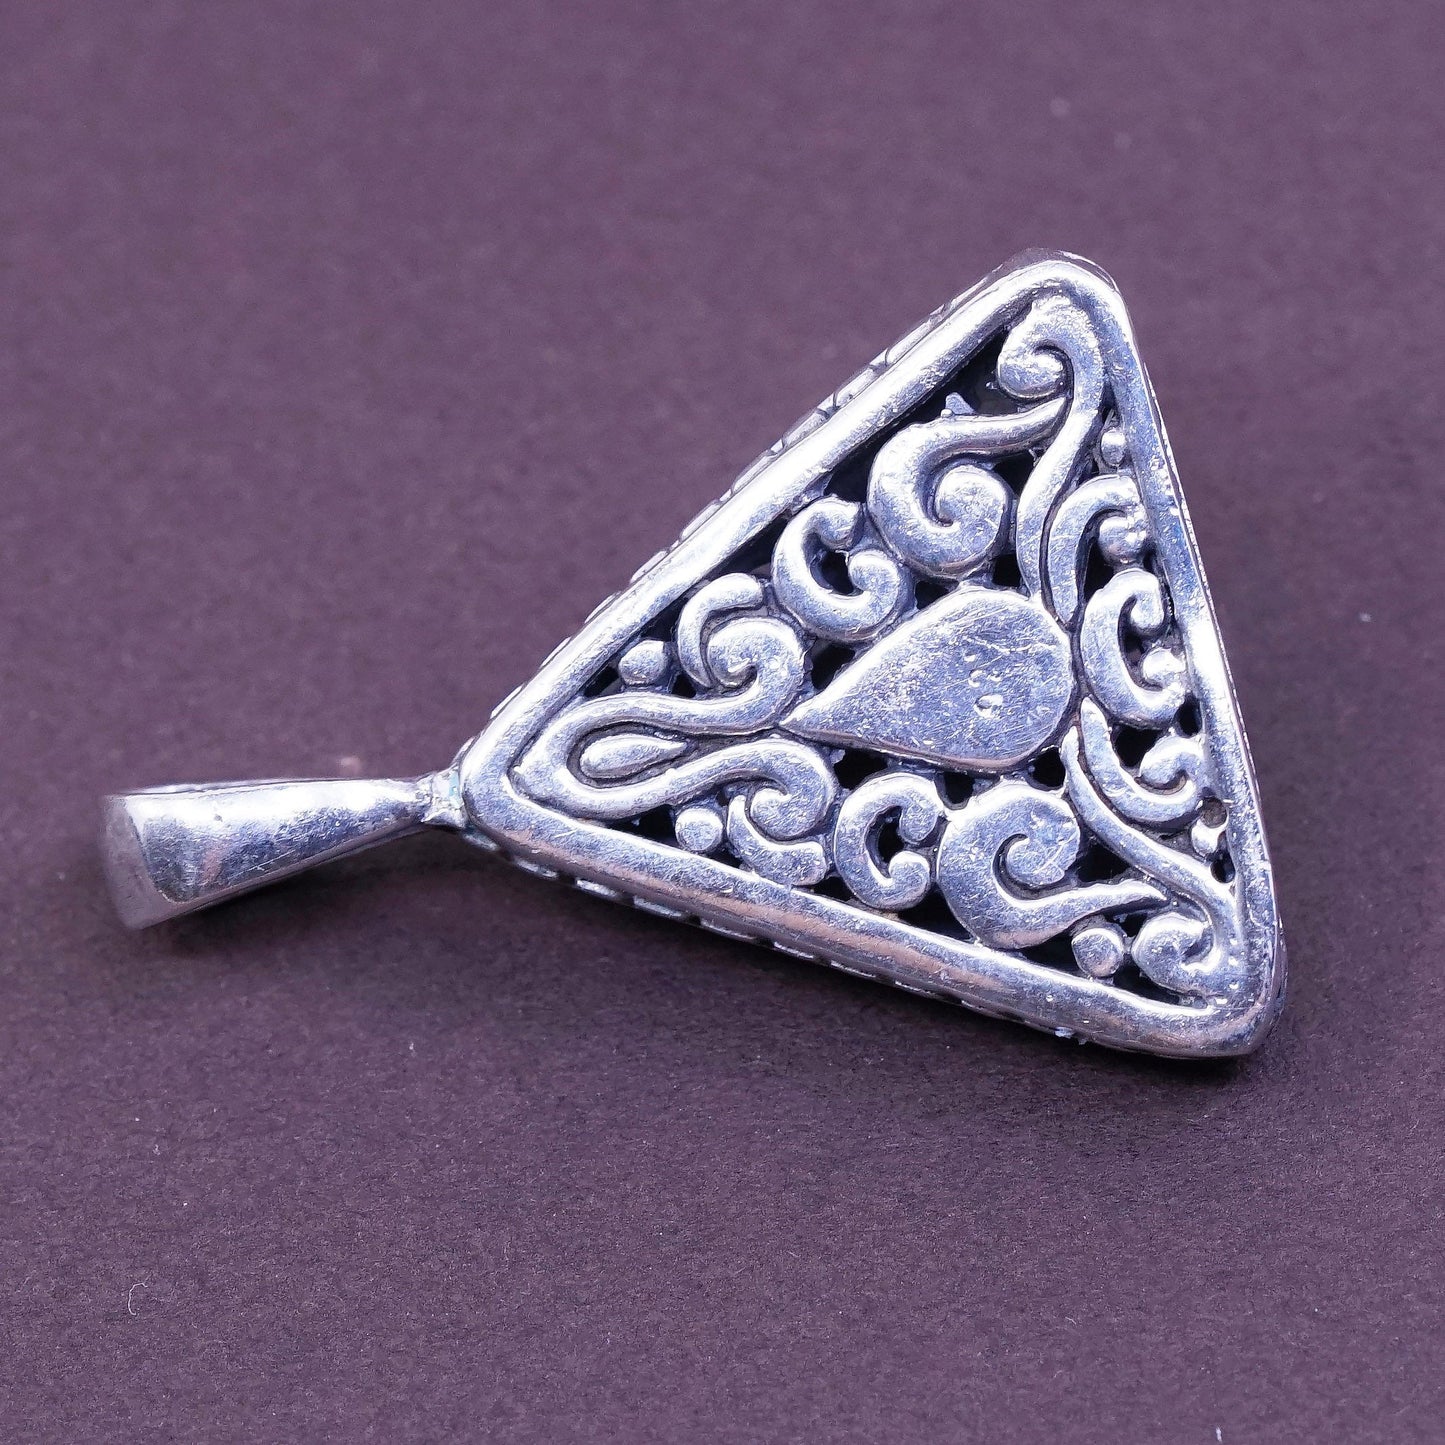 vtg Sterling silver handmade pendant, 925 triangular bali filigree w/ Amber